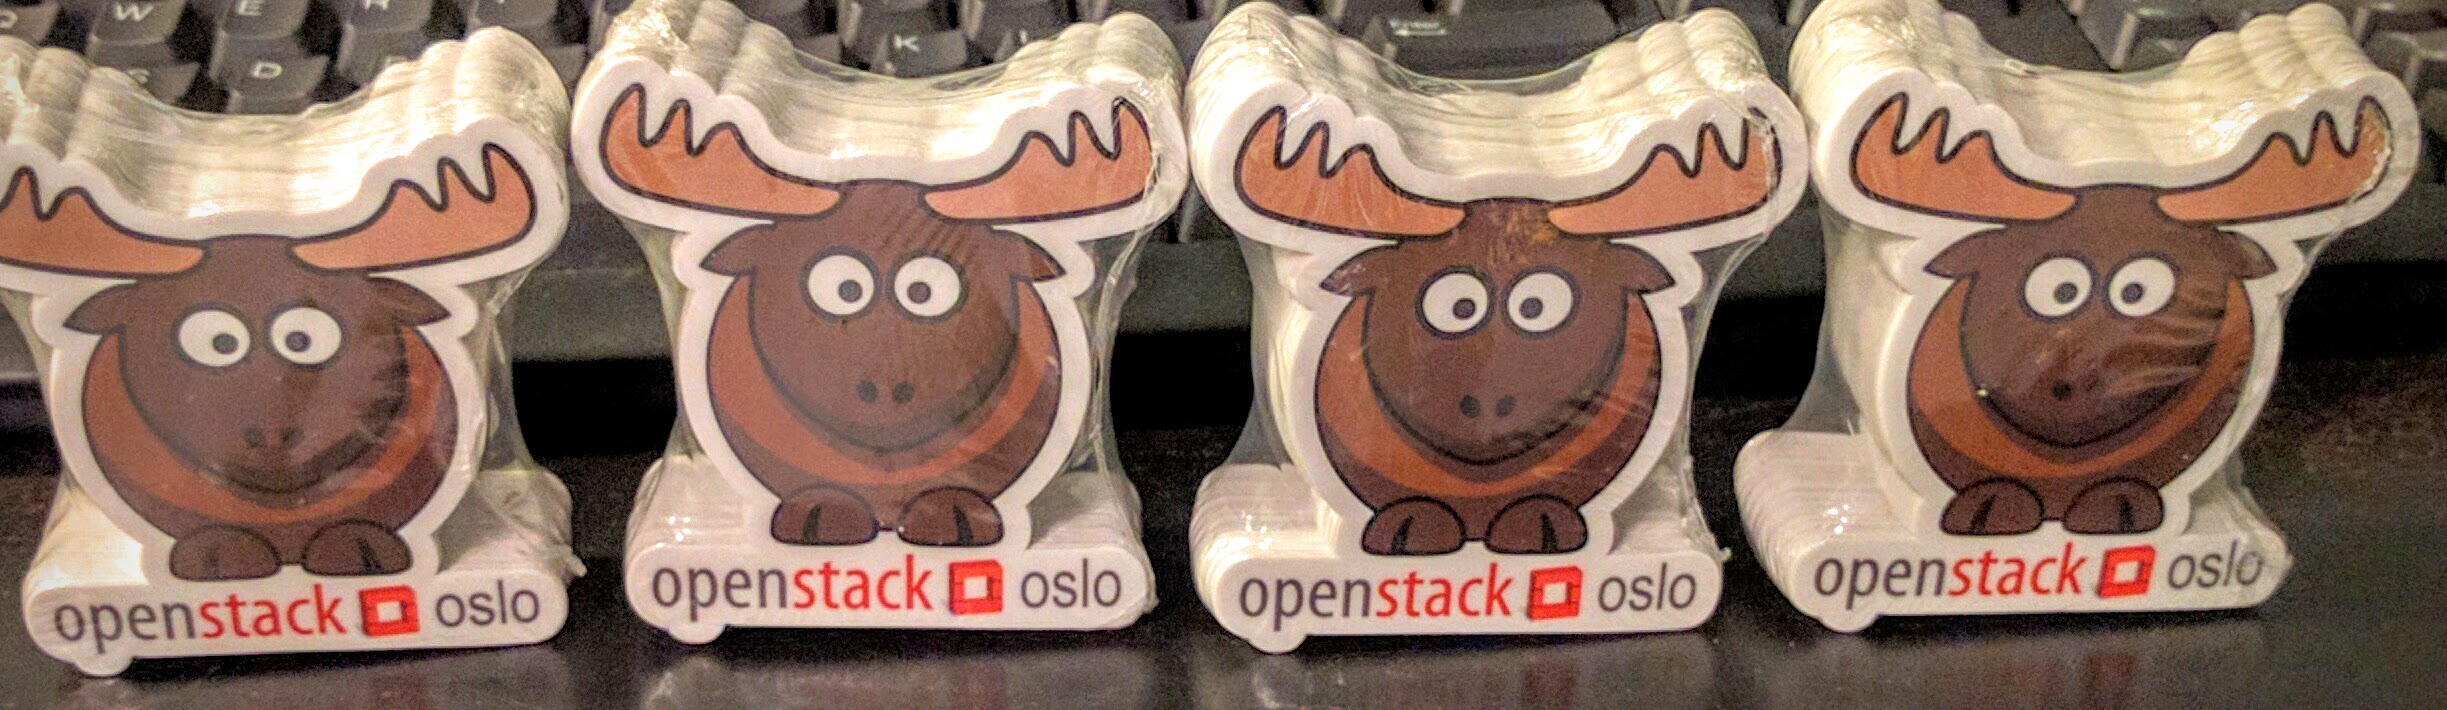 OpenStack Oslo Stickers - Austin 2014